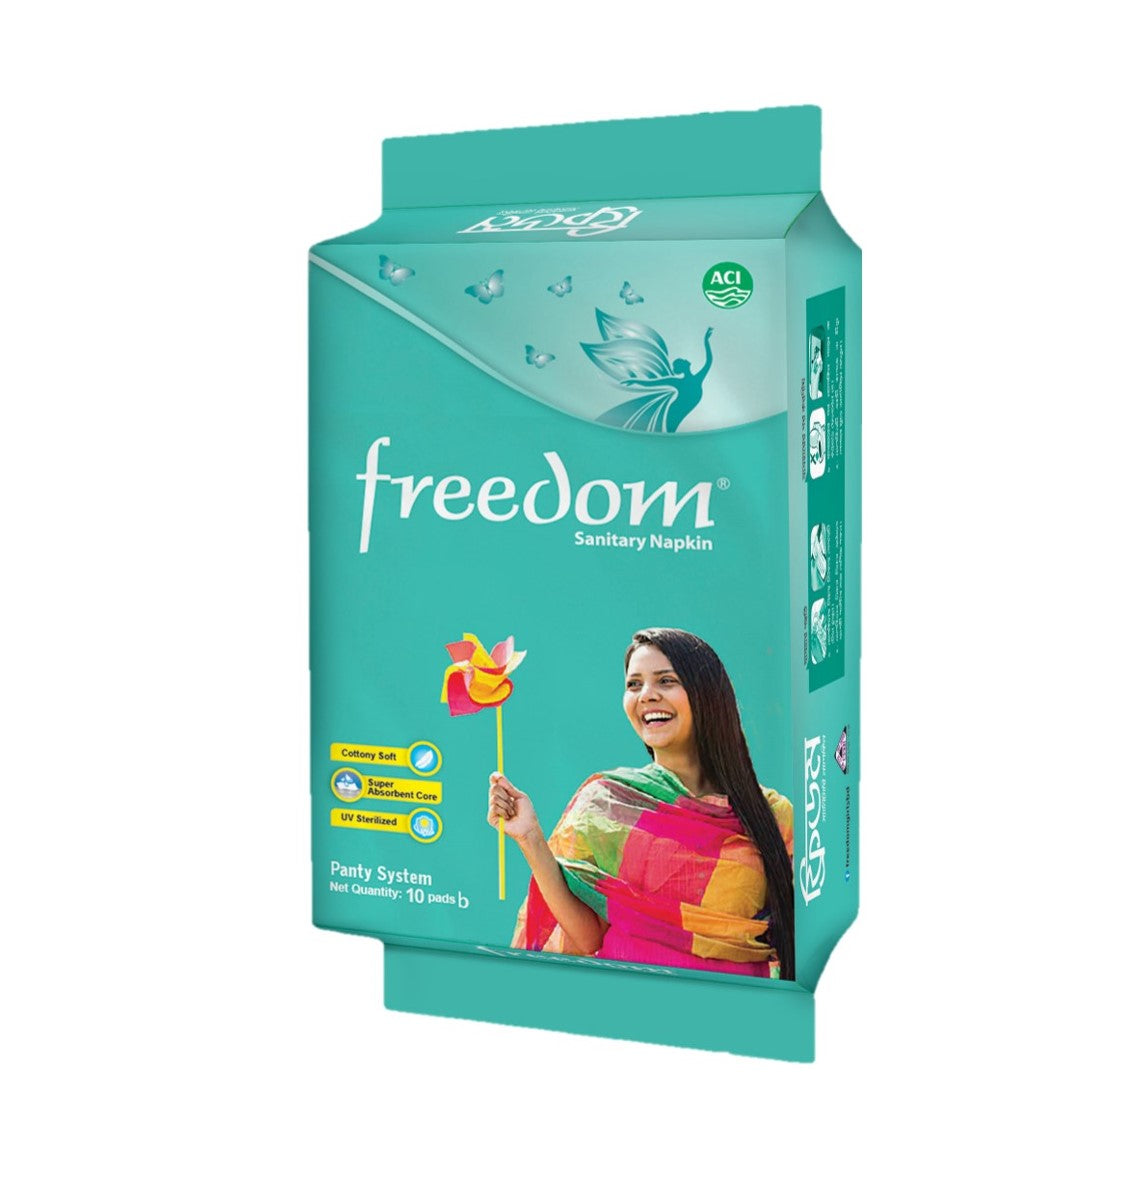 Buy Freedom Sanitary Napkin - Panty System Online at Best Price in